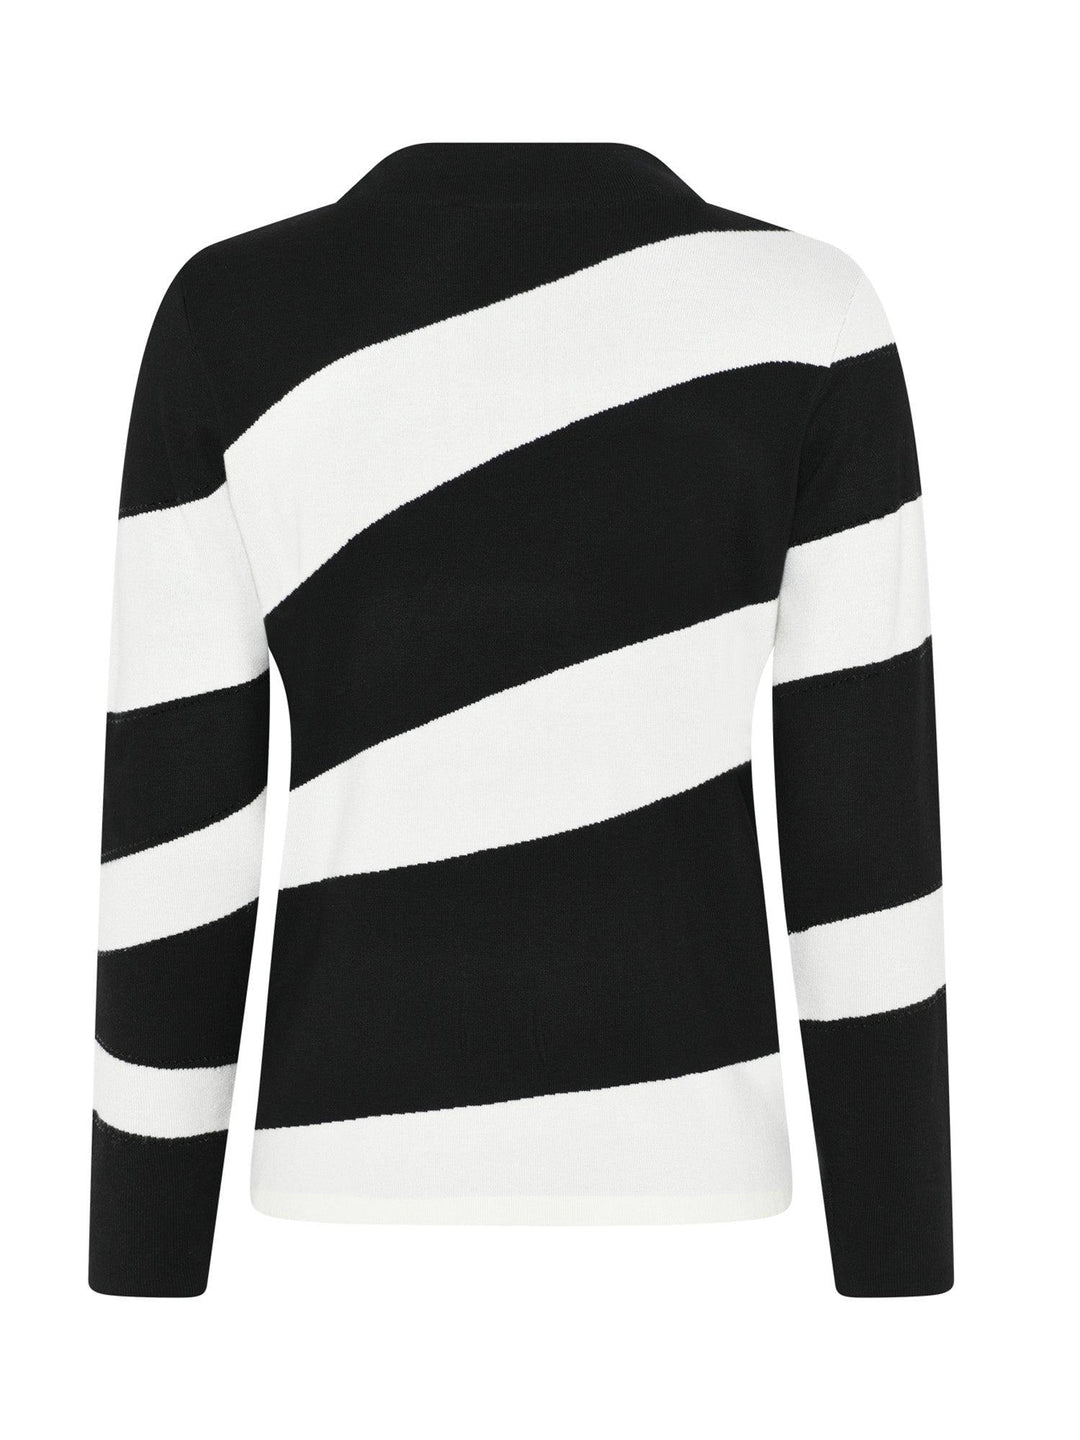 i’cona Pullover Style 64110-60002-90 - AW22, Black, New, Pullover, Stripe, White ginasmartboutique